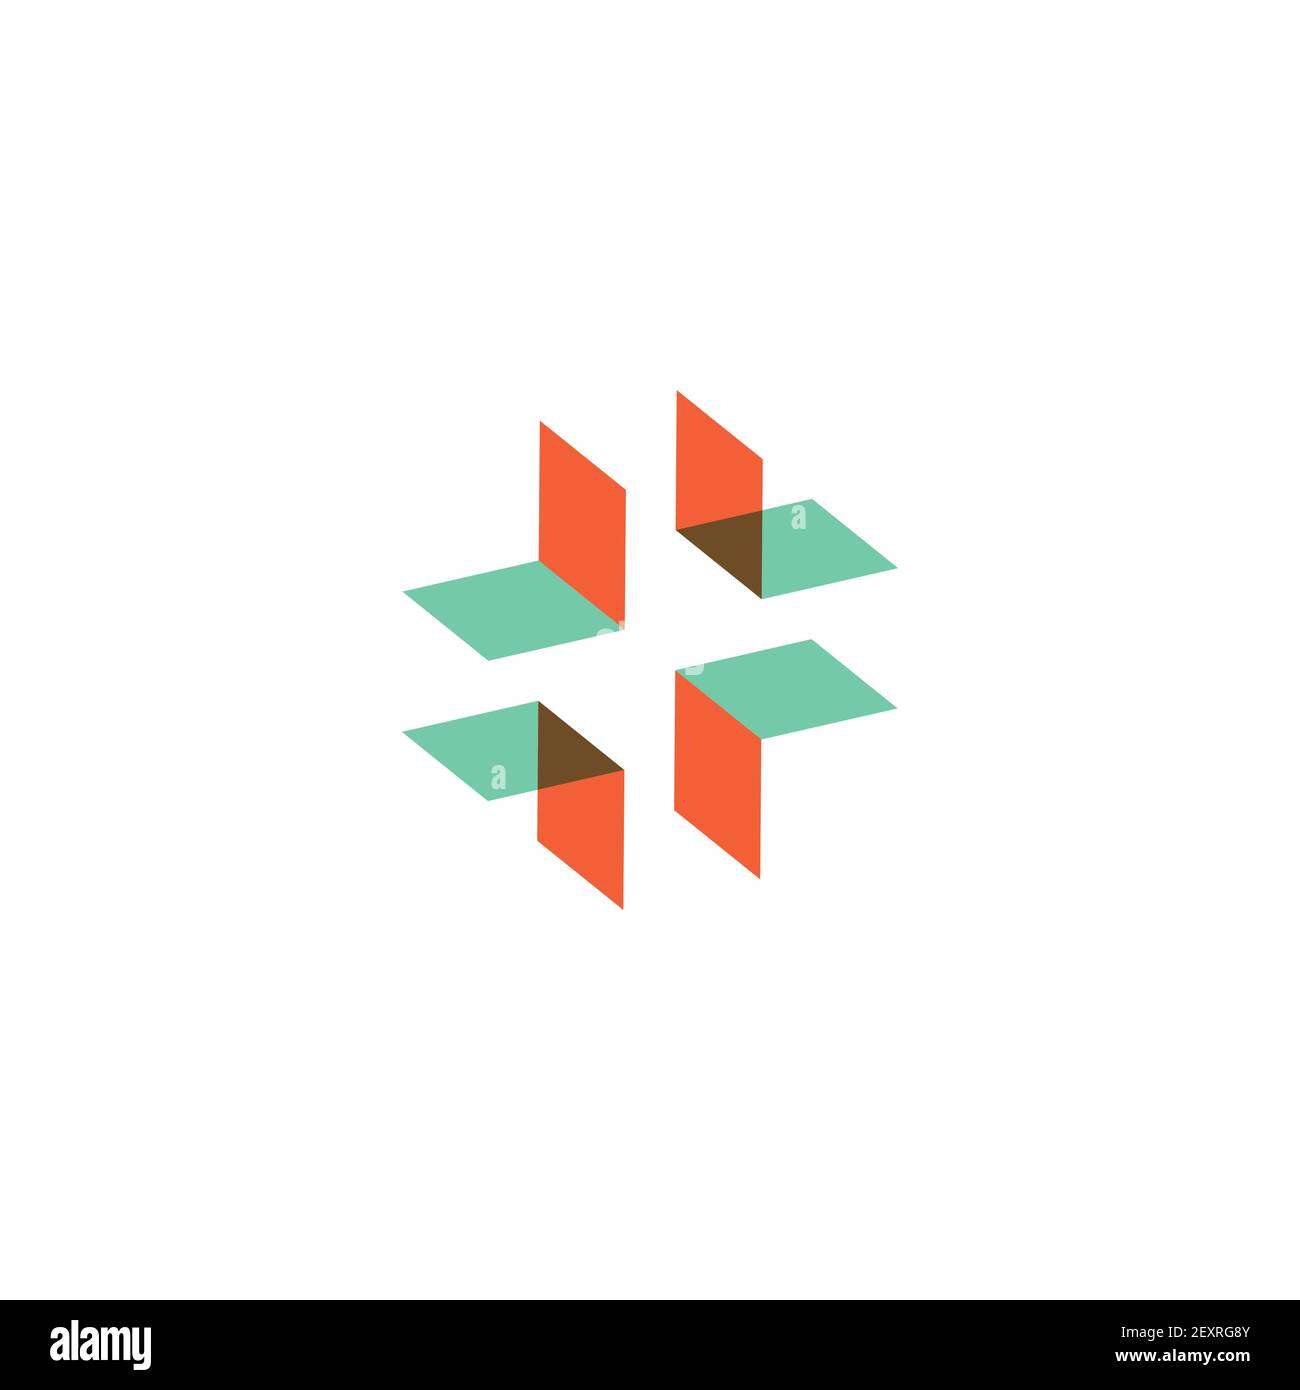 Tele Medicine Logo Konzept, abstrakte geometrische medizinische Kreuz Symbol, Farbe Overlay Form, neue med Technologie Zeichen, Innovation Medizin, Vektor Stock Vektor